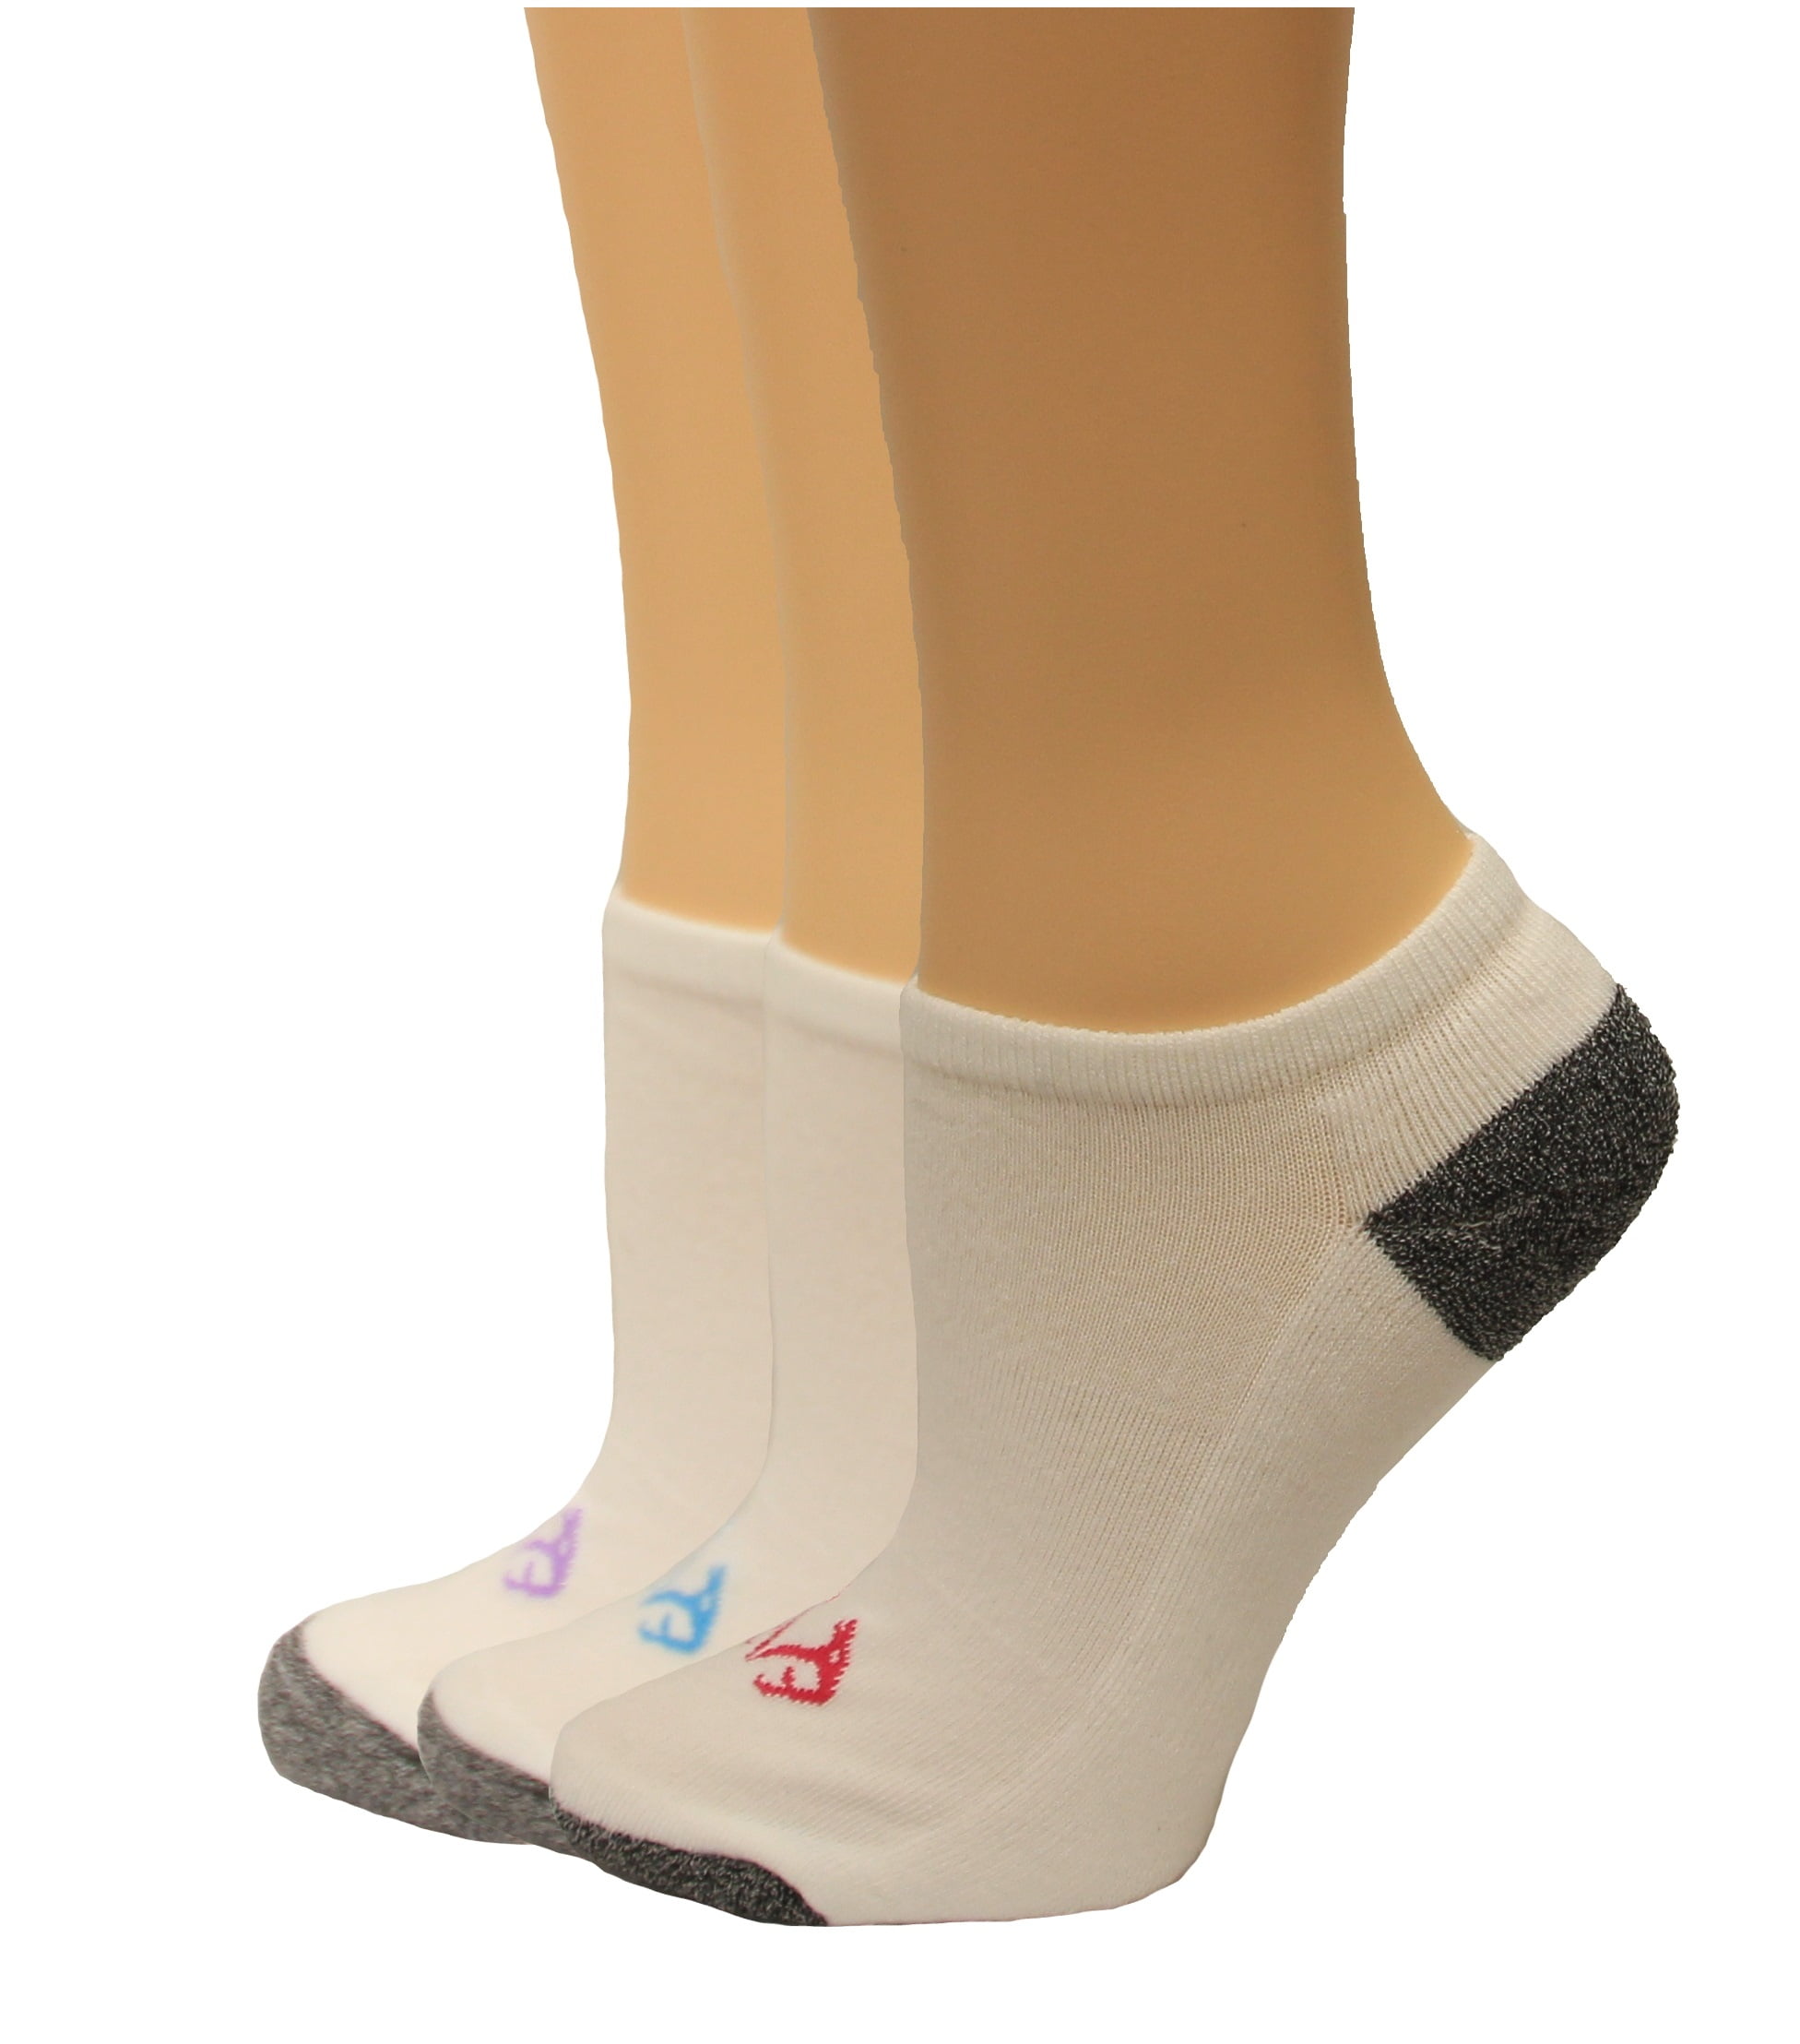 Realtree Women's Mid Calf Socks Gift Box 3-Pair Pack